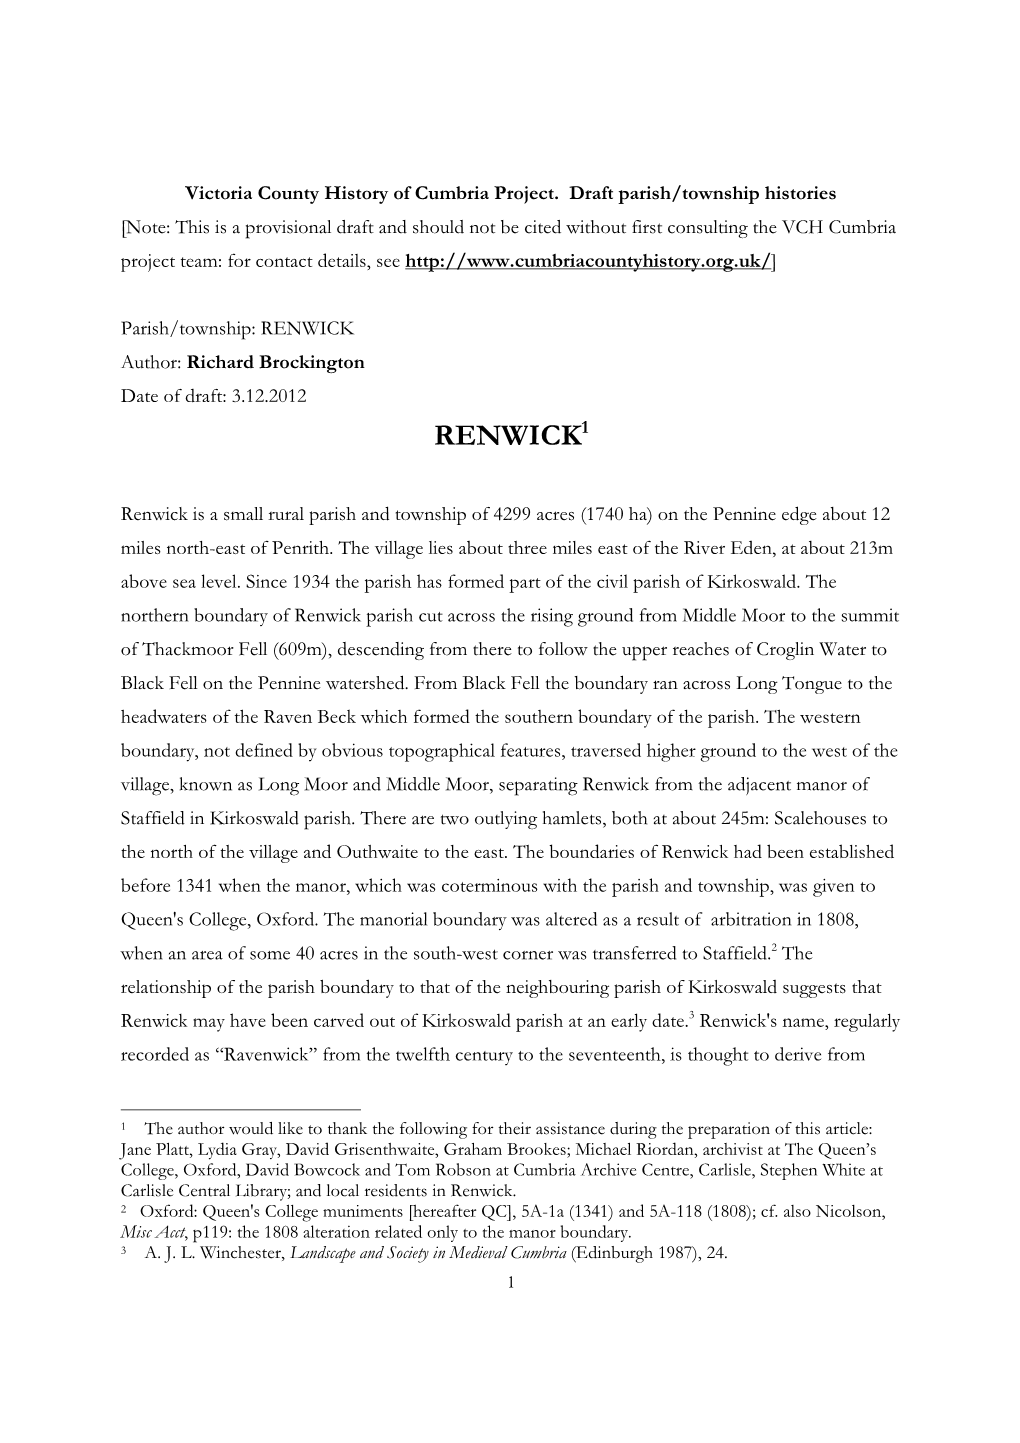 RENWICK Author: Richard Brockington Date of Draft: 3.12.2012 RENWICK 1